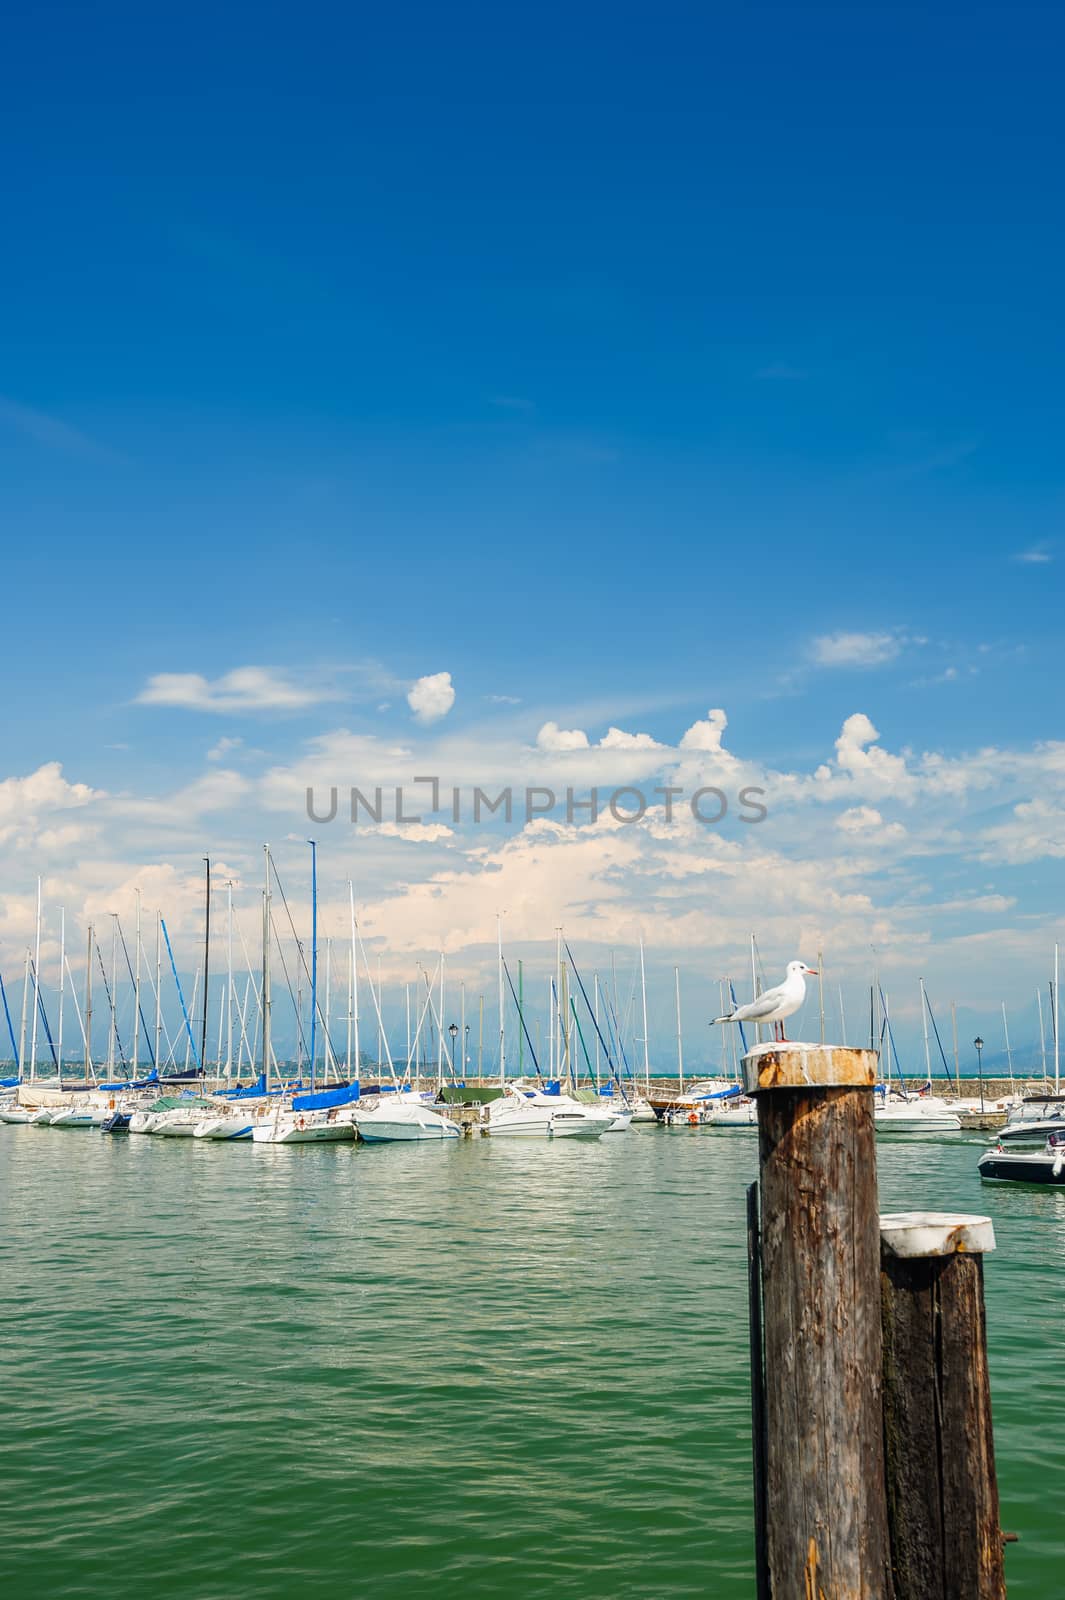 Desenzano, Lombardy, northern Italy, 15th August 2016: Small yachts in harbor in Desenzano del Garda, lake Garda, Italy